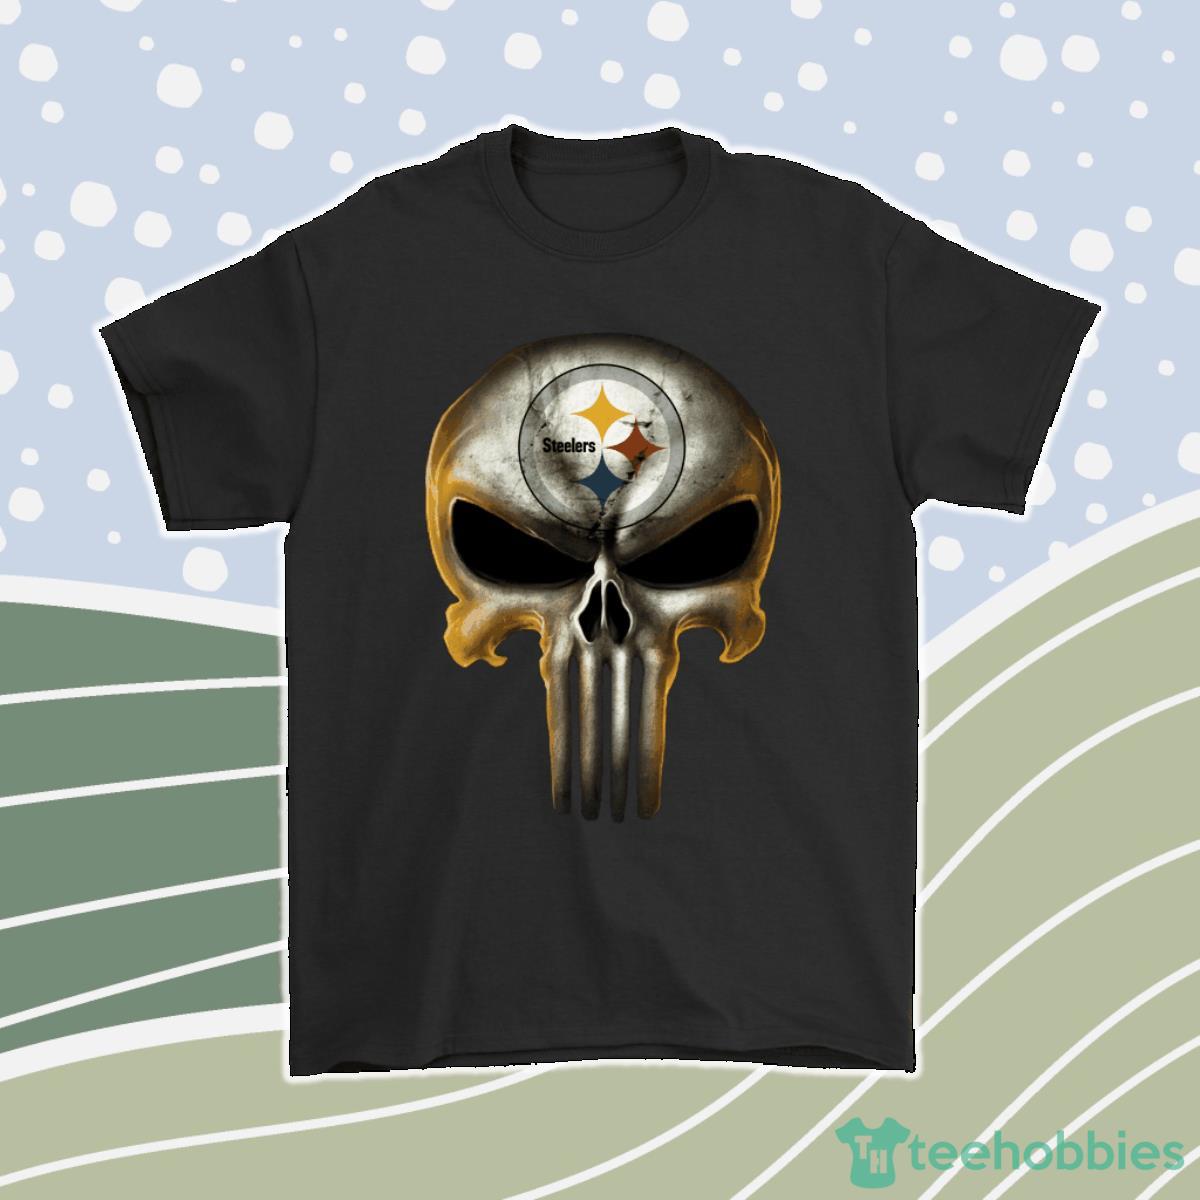 Pittsburgh Steelers Punisher New Skull Full 3D Hoodie All